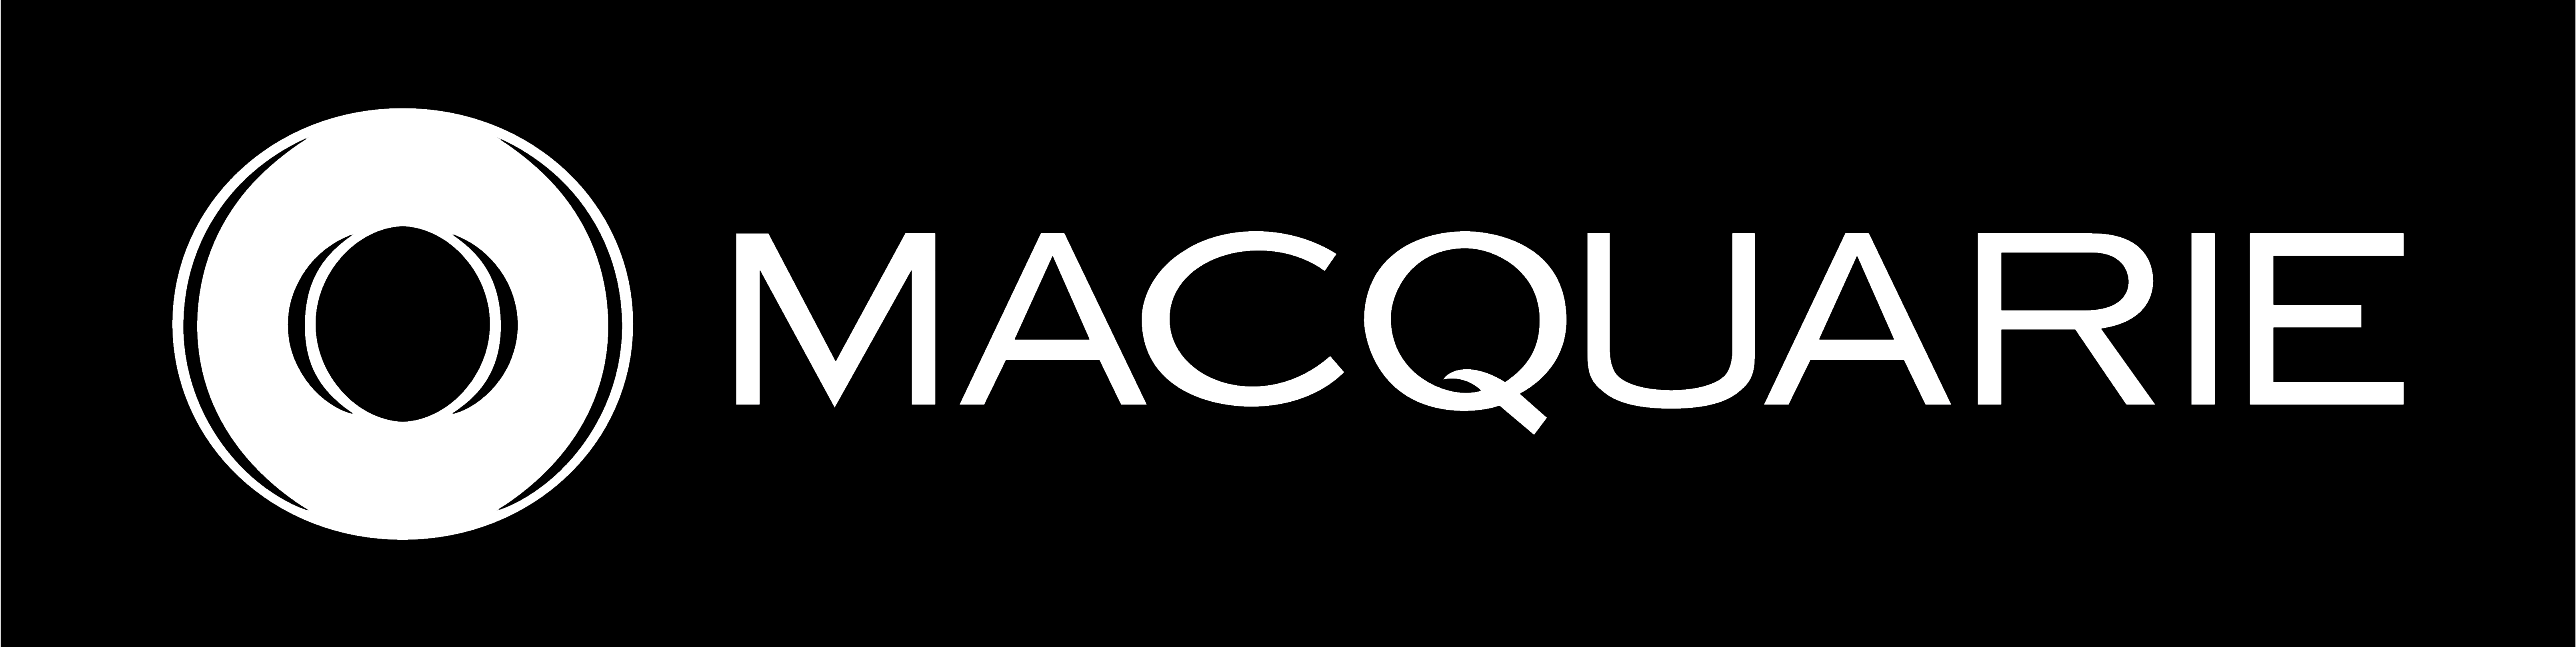 Macquarie Group, Ltd.